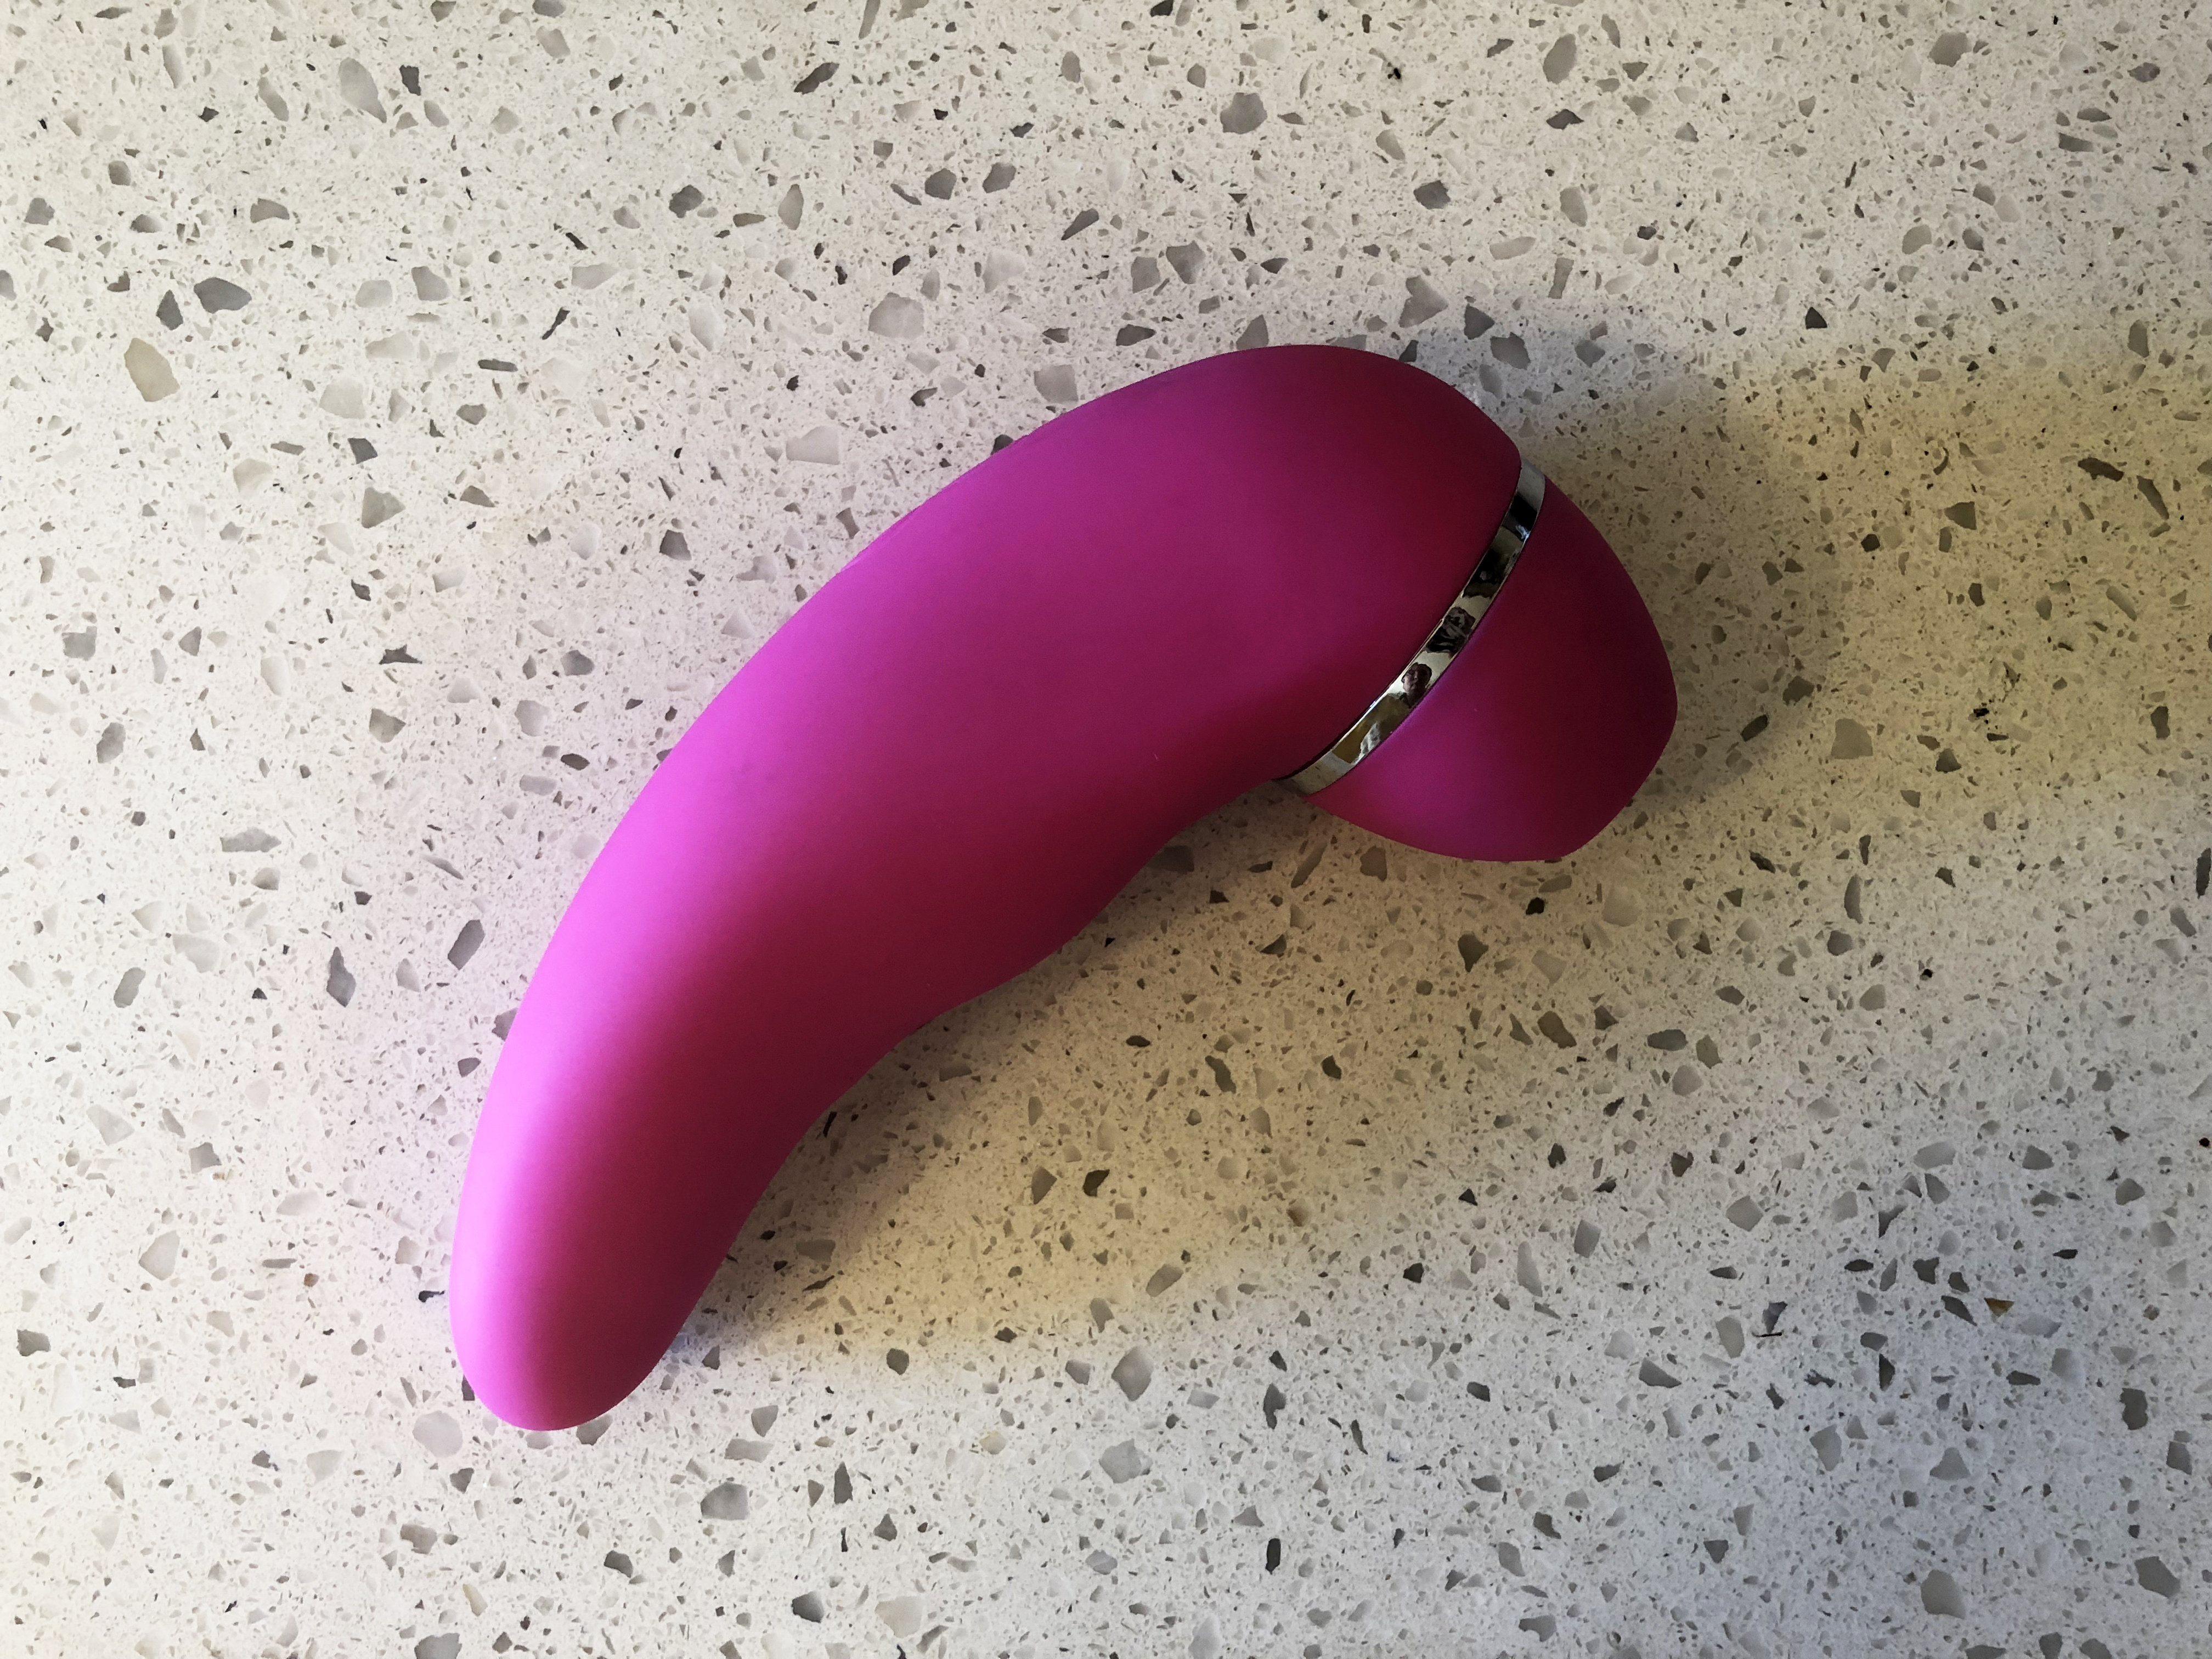 Found sex toys